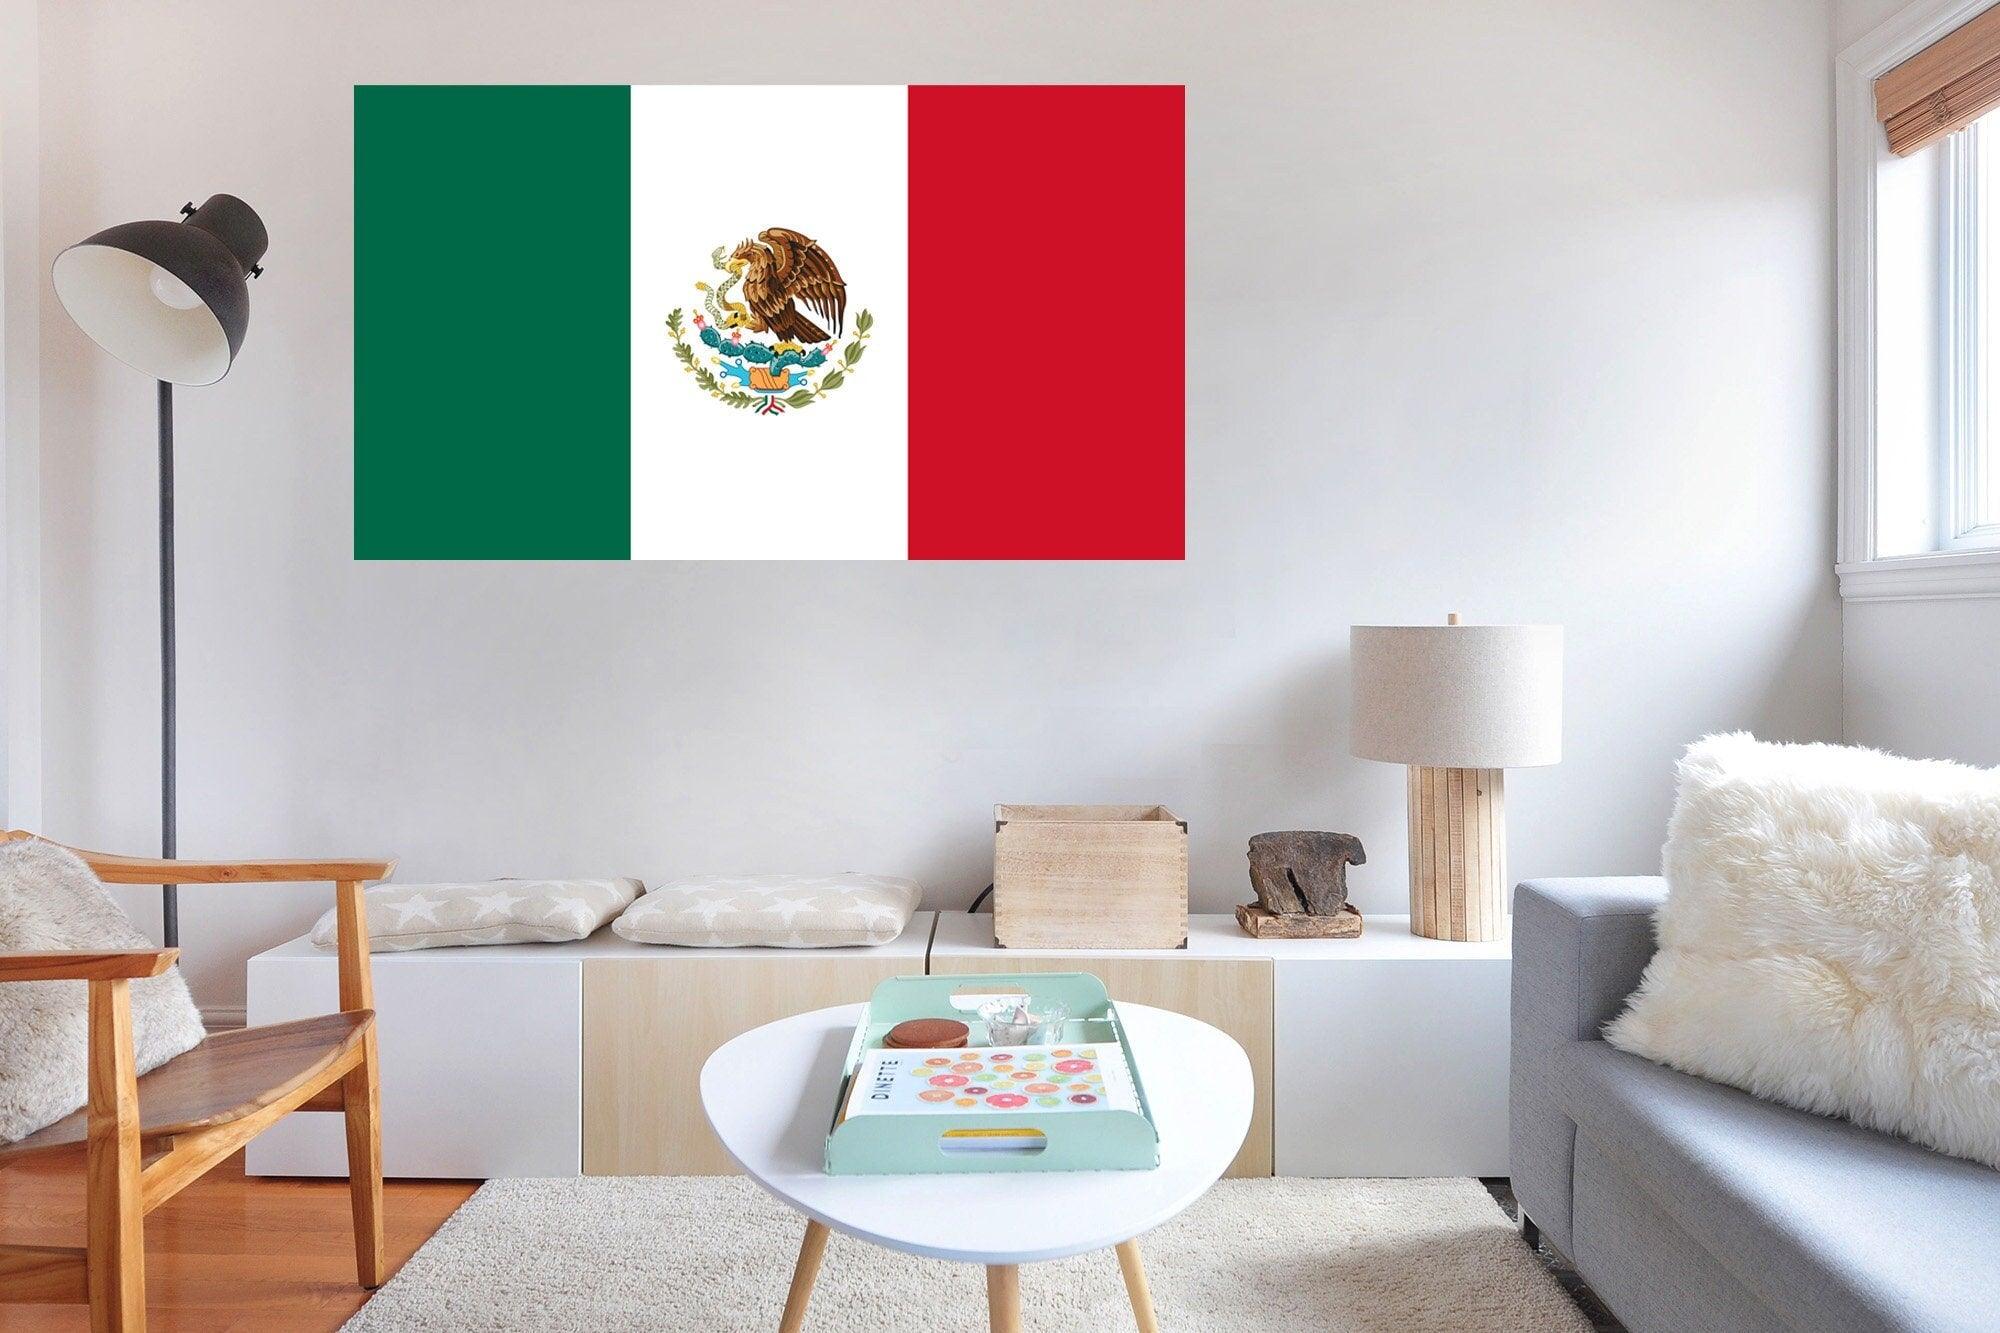 Mexican Flag Emblem | Sticker